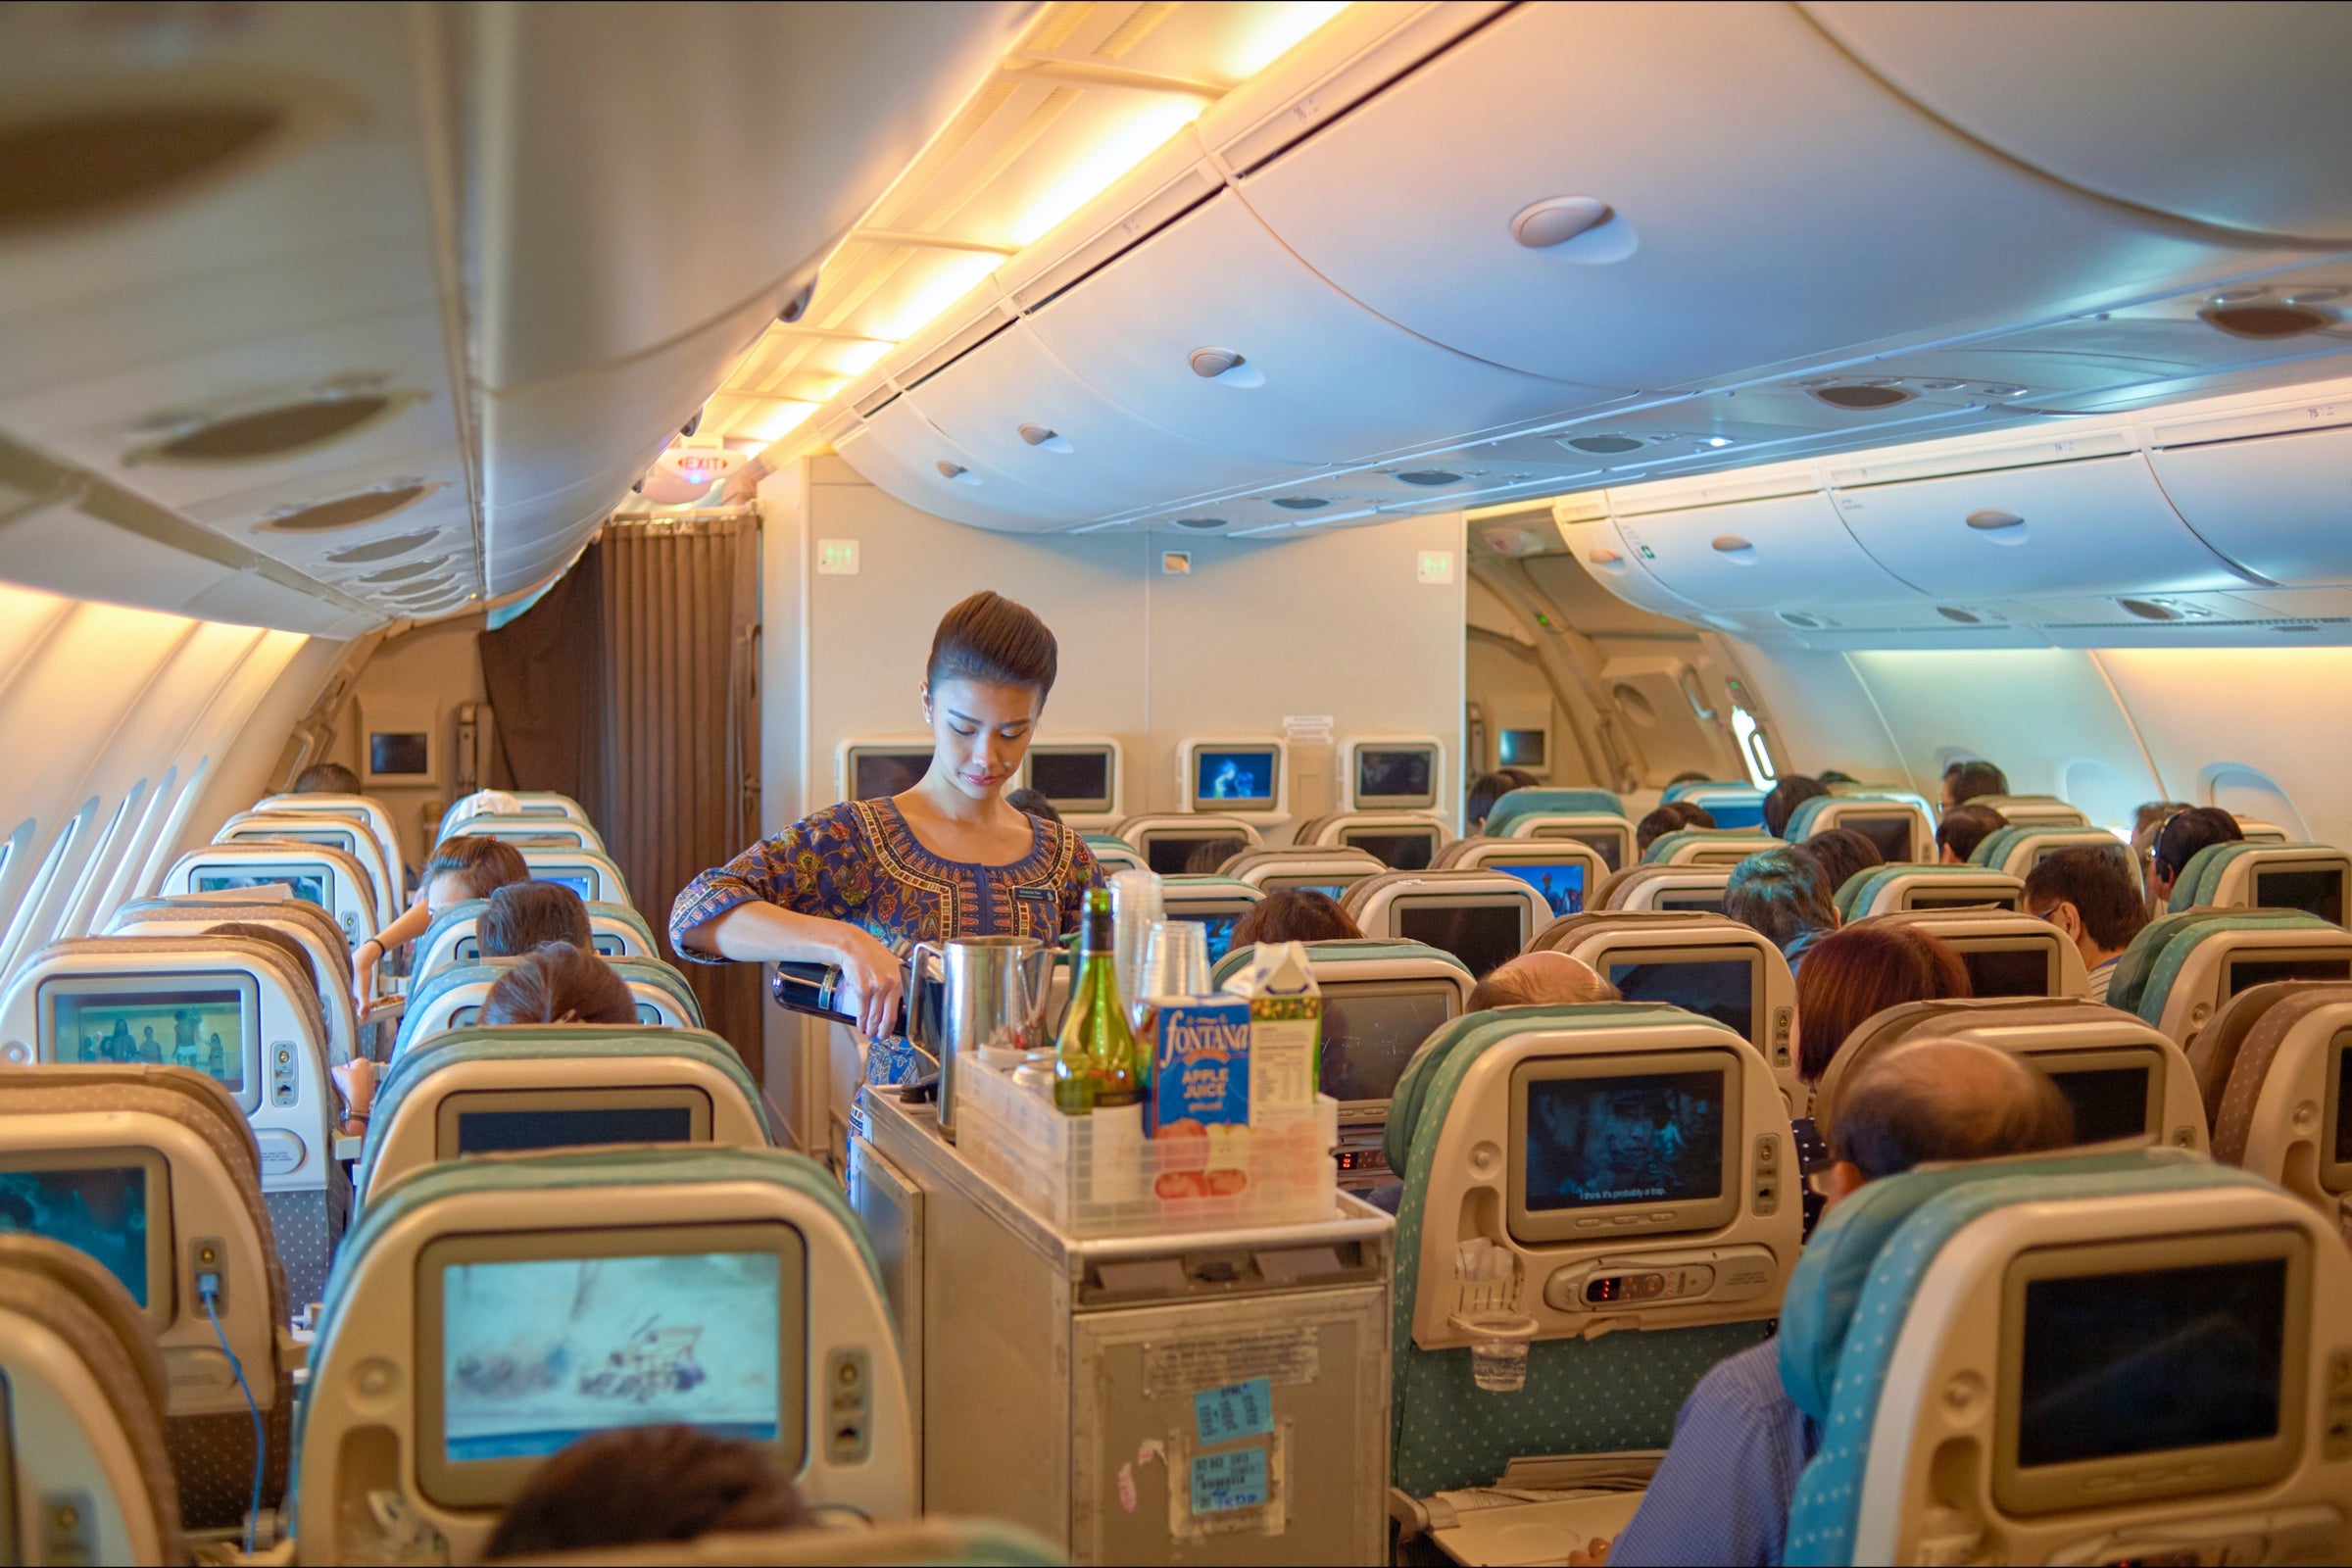 Flight attendant serving drinks from airplane bar cart